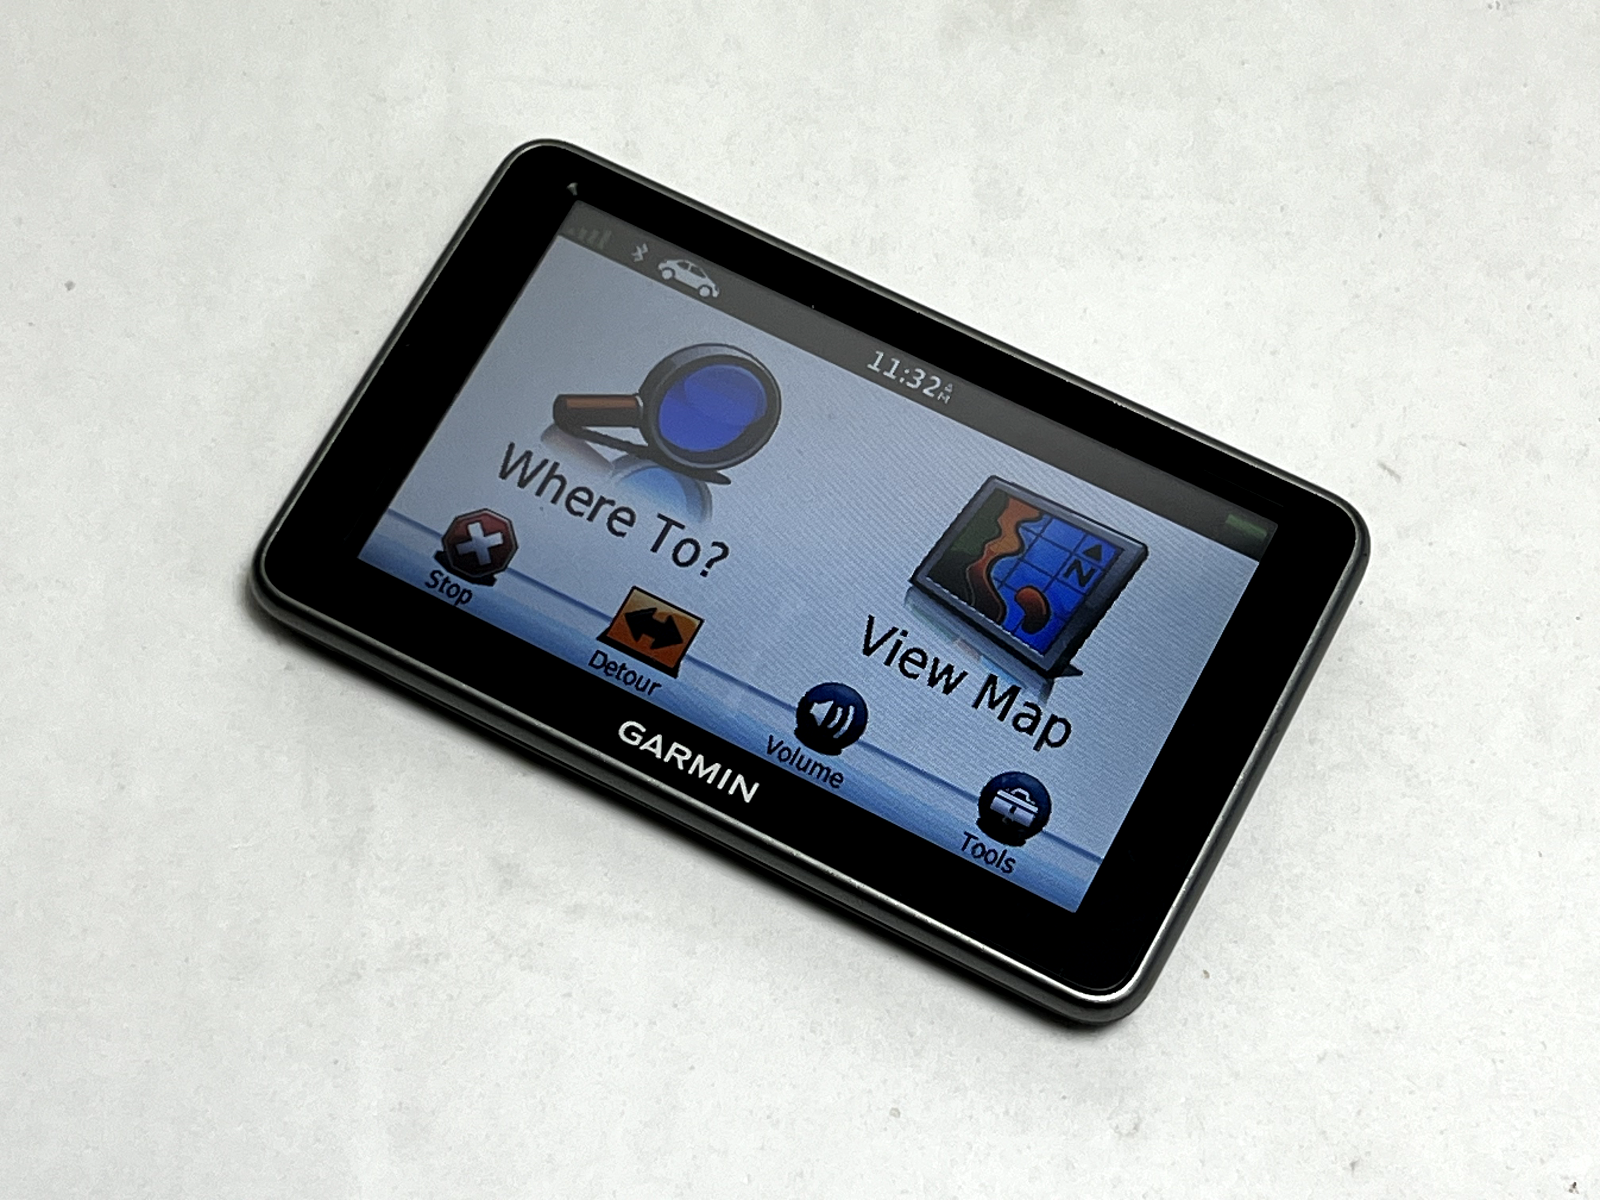 Garmin Nuvi 2460 Black 5" Touchscreen Hands-Free Calling Portable GPS Navigator - $19.79